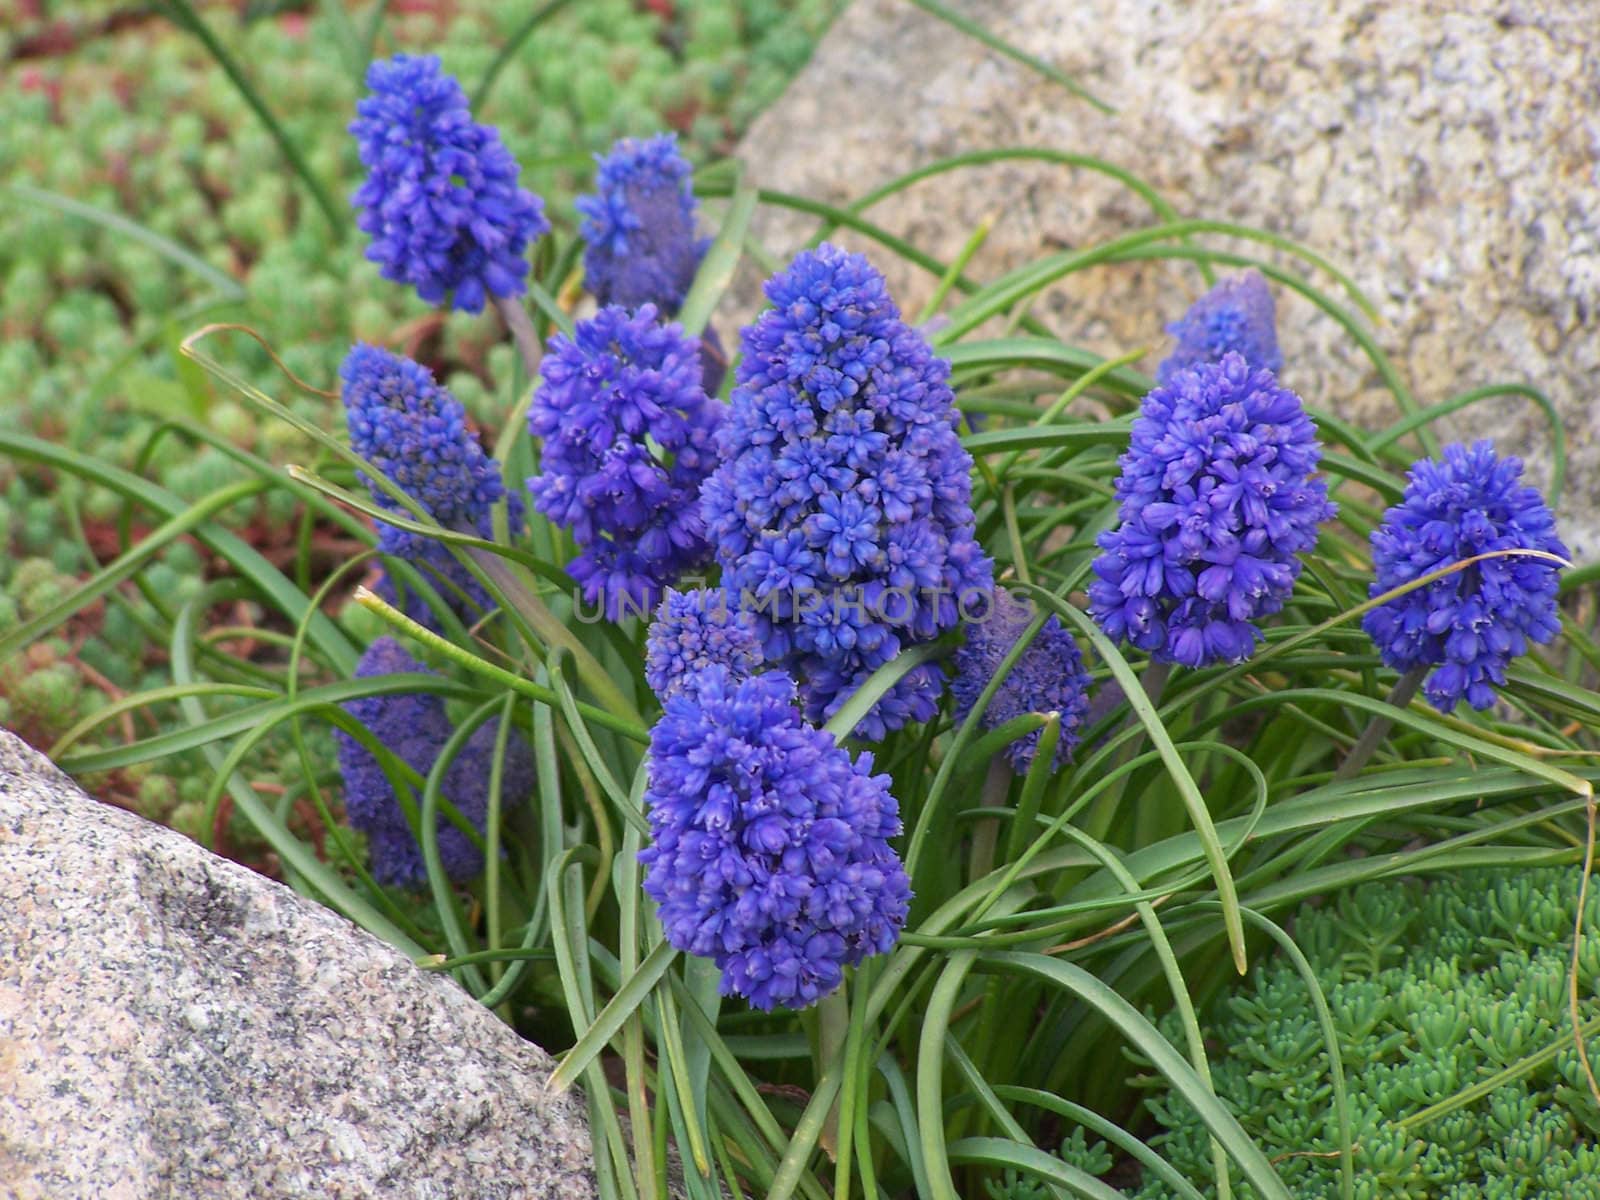 Preetty blue flowers by Lessadar